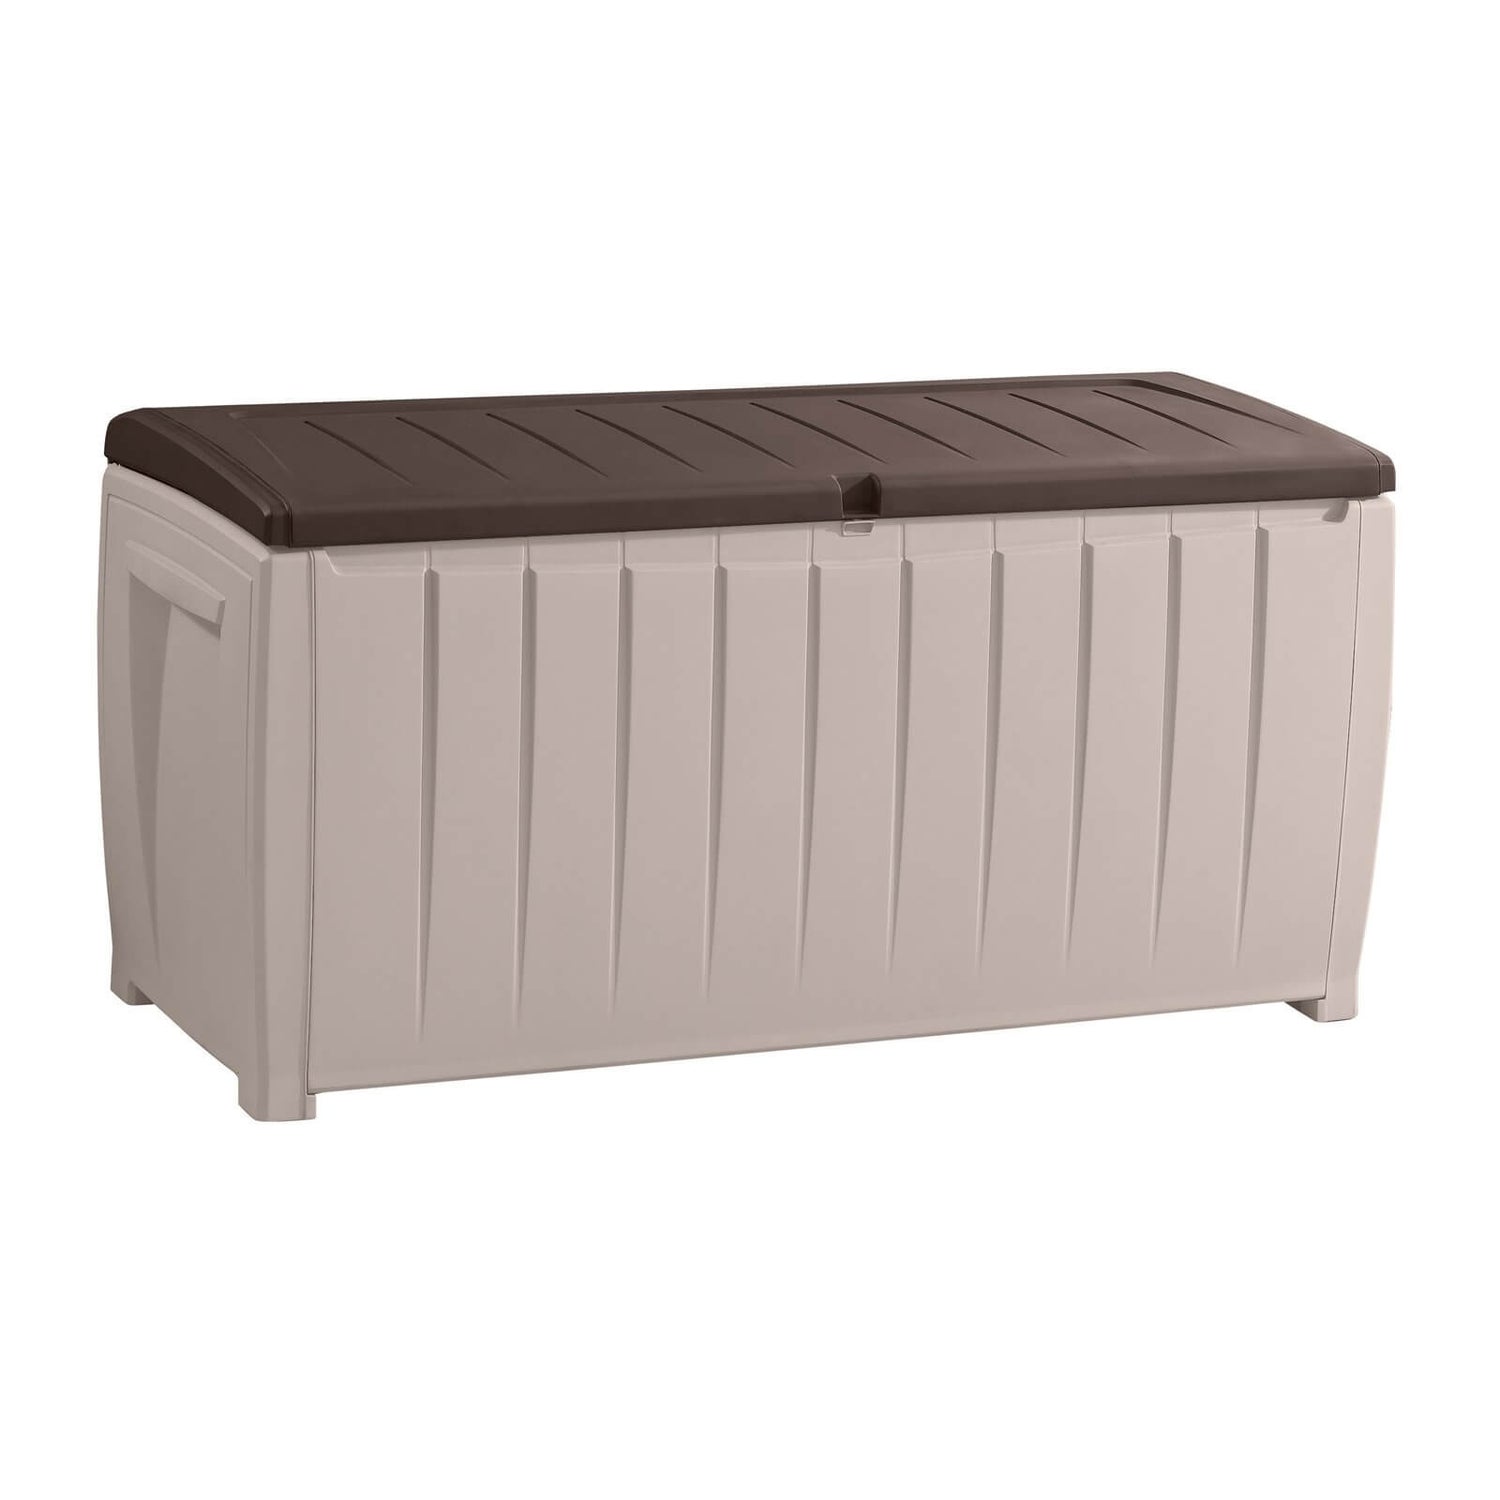 Keter Novel Plastic Outdoor Garden Storage Box 340L - Beige/ Brown